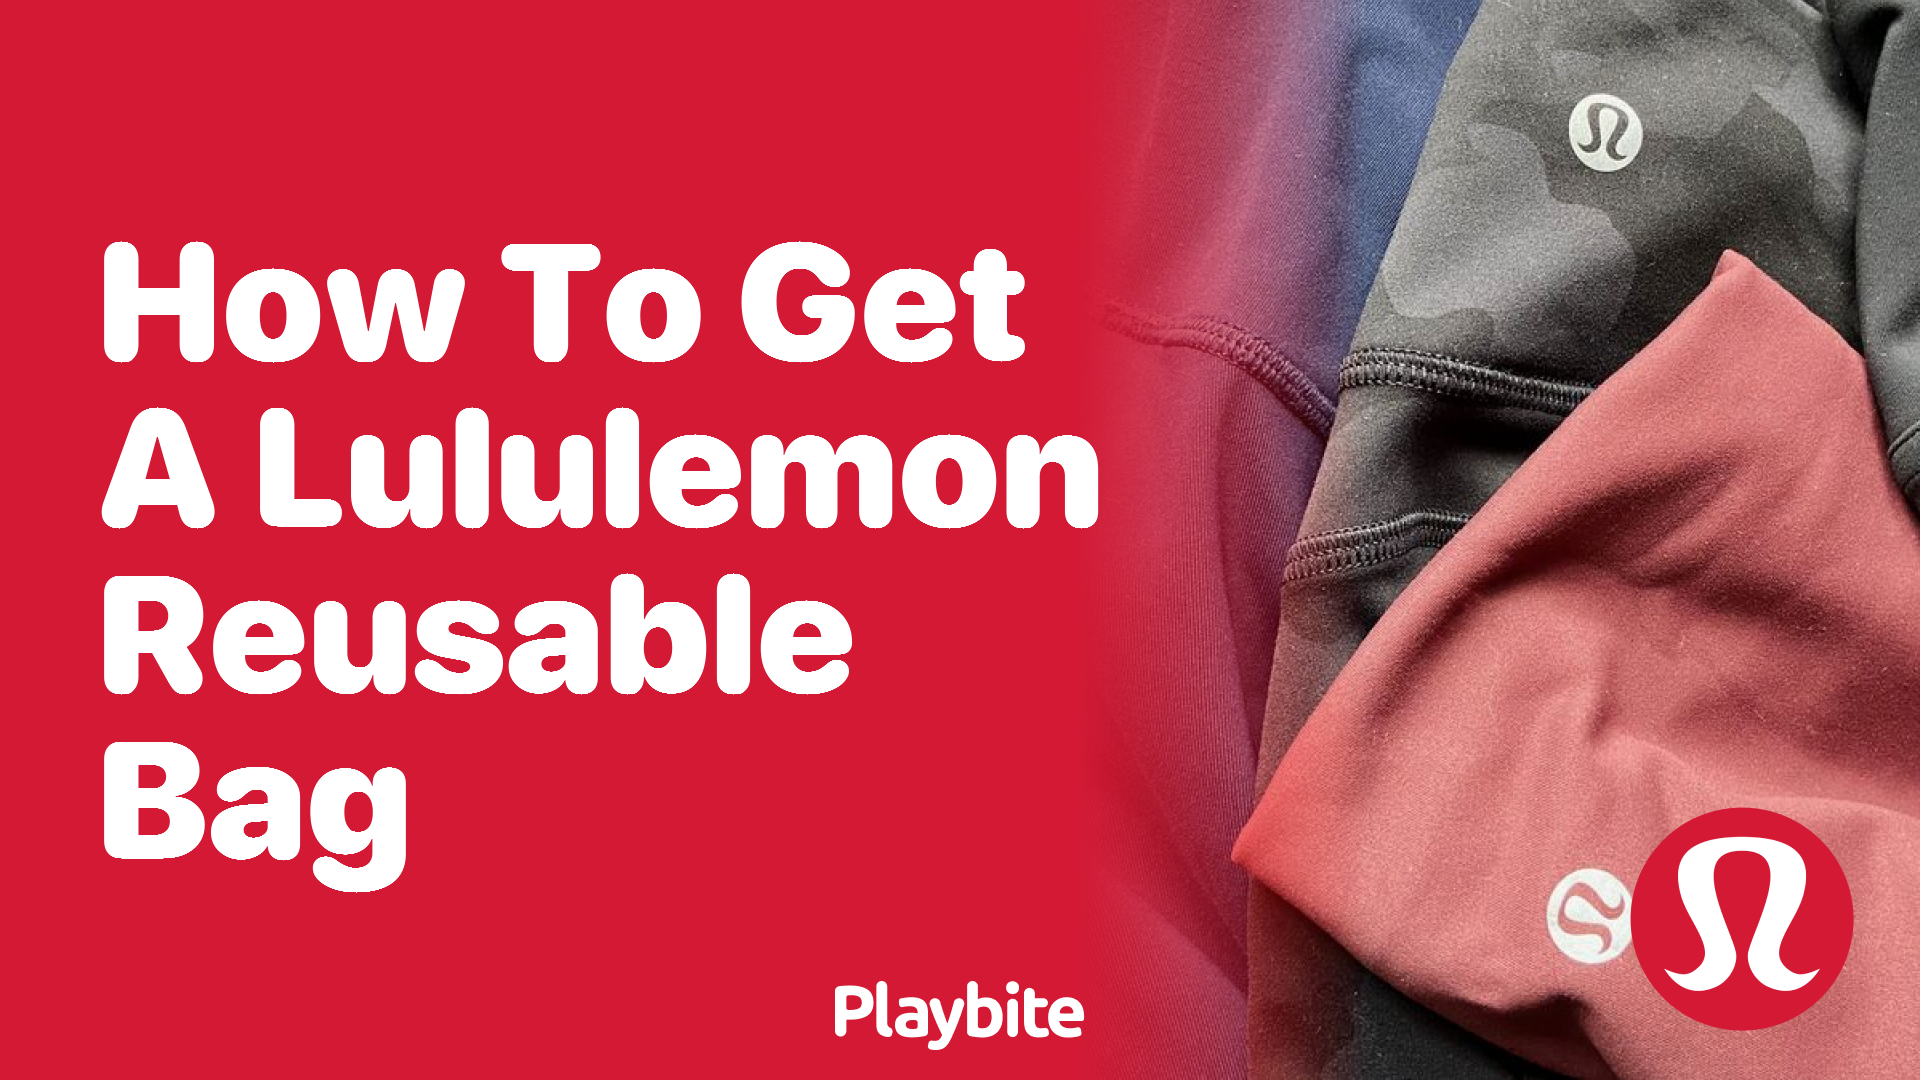 How to Get a Lululemon Reusable Bag - Playbite